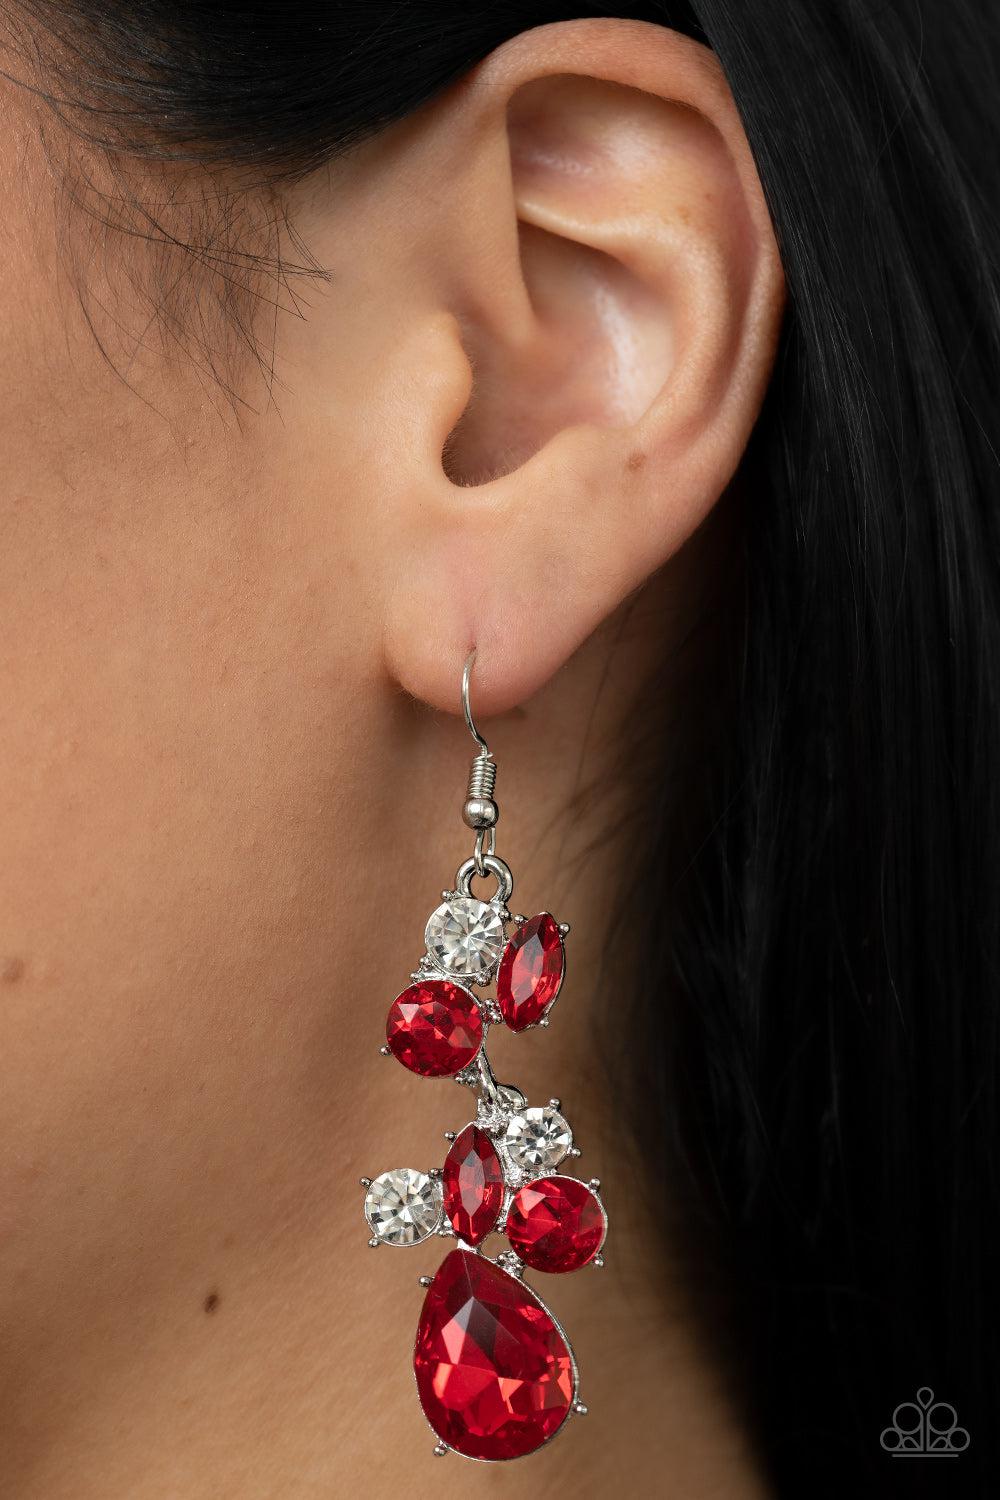 Rhinestone Reveler Red Earrings - Paparazzi Accessories-on model - CarasShop.com - $5 Jewelry by Cara Jewels